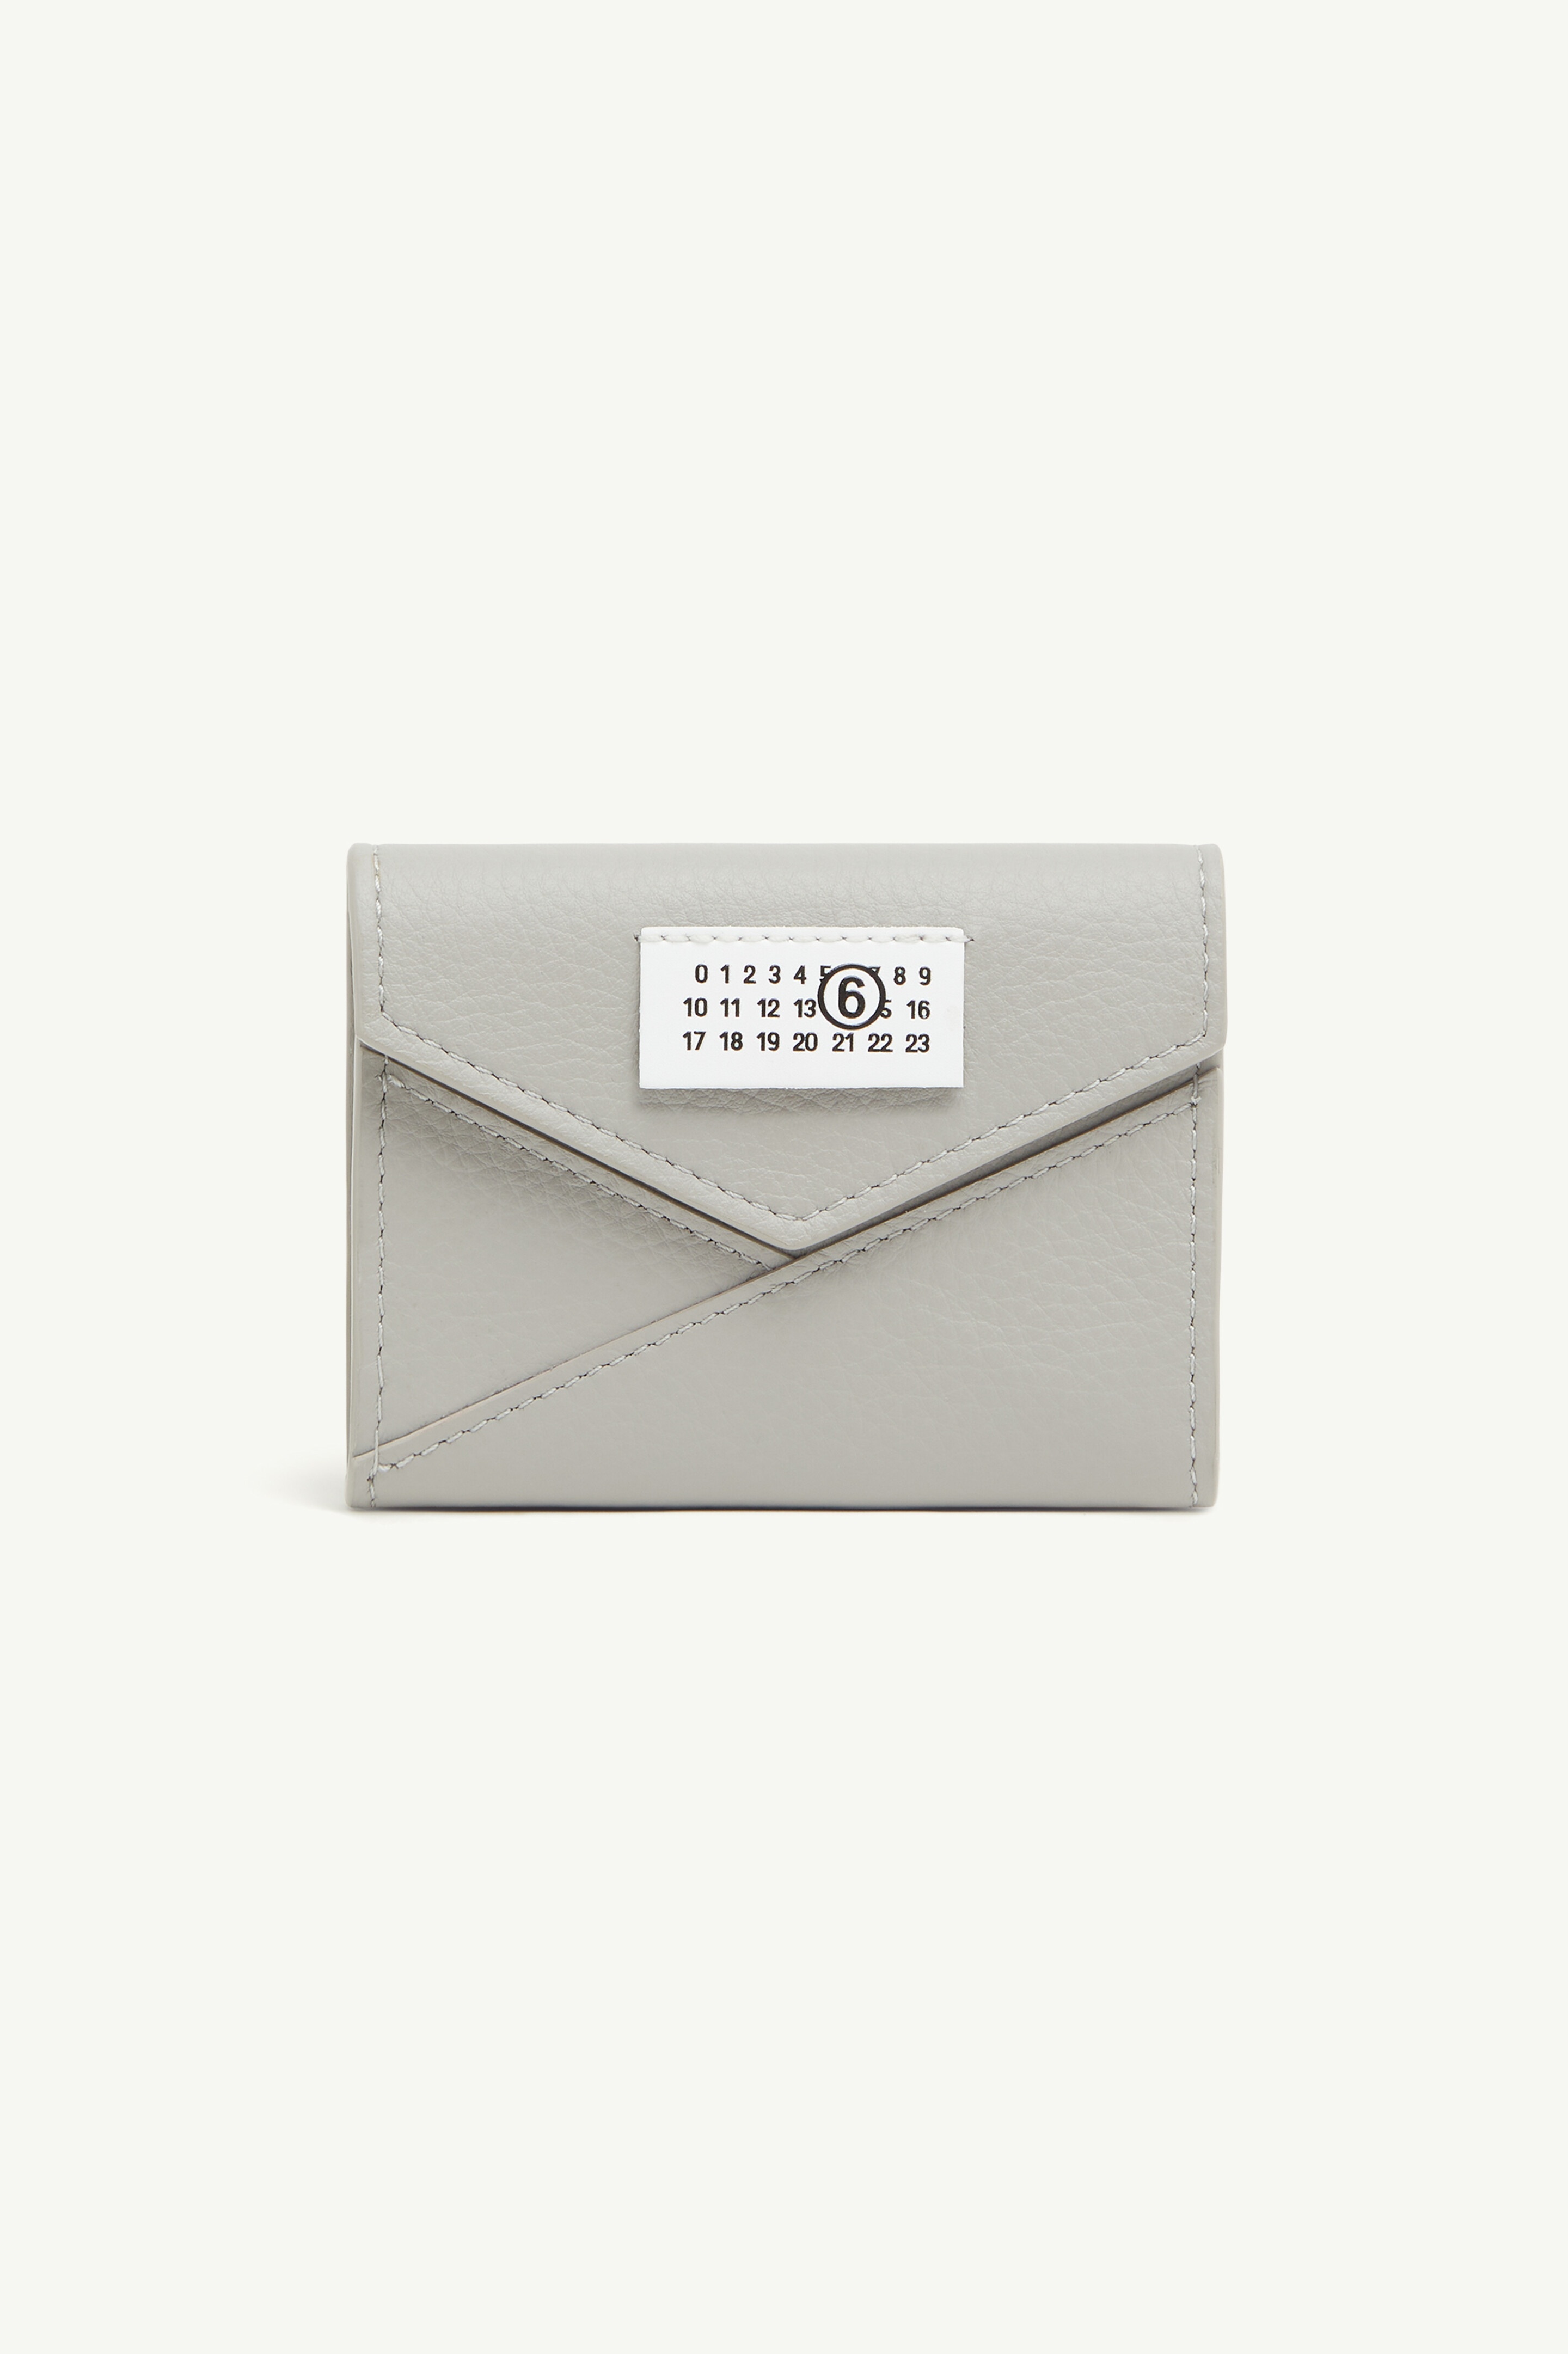 Japanese 6 flap wallet - 1